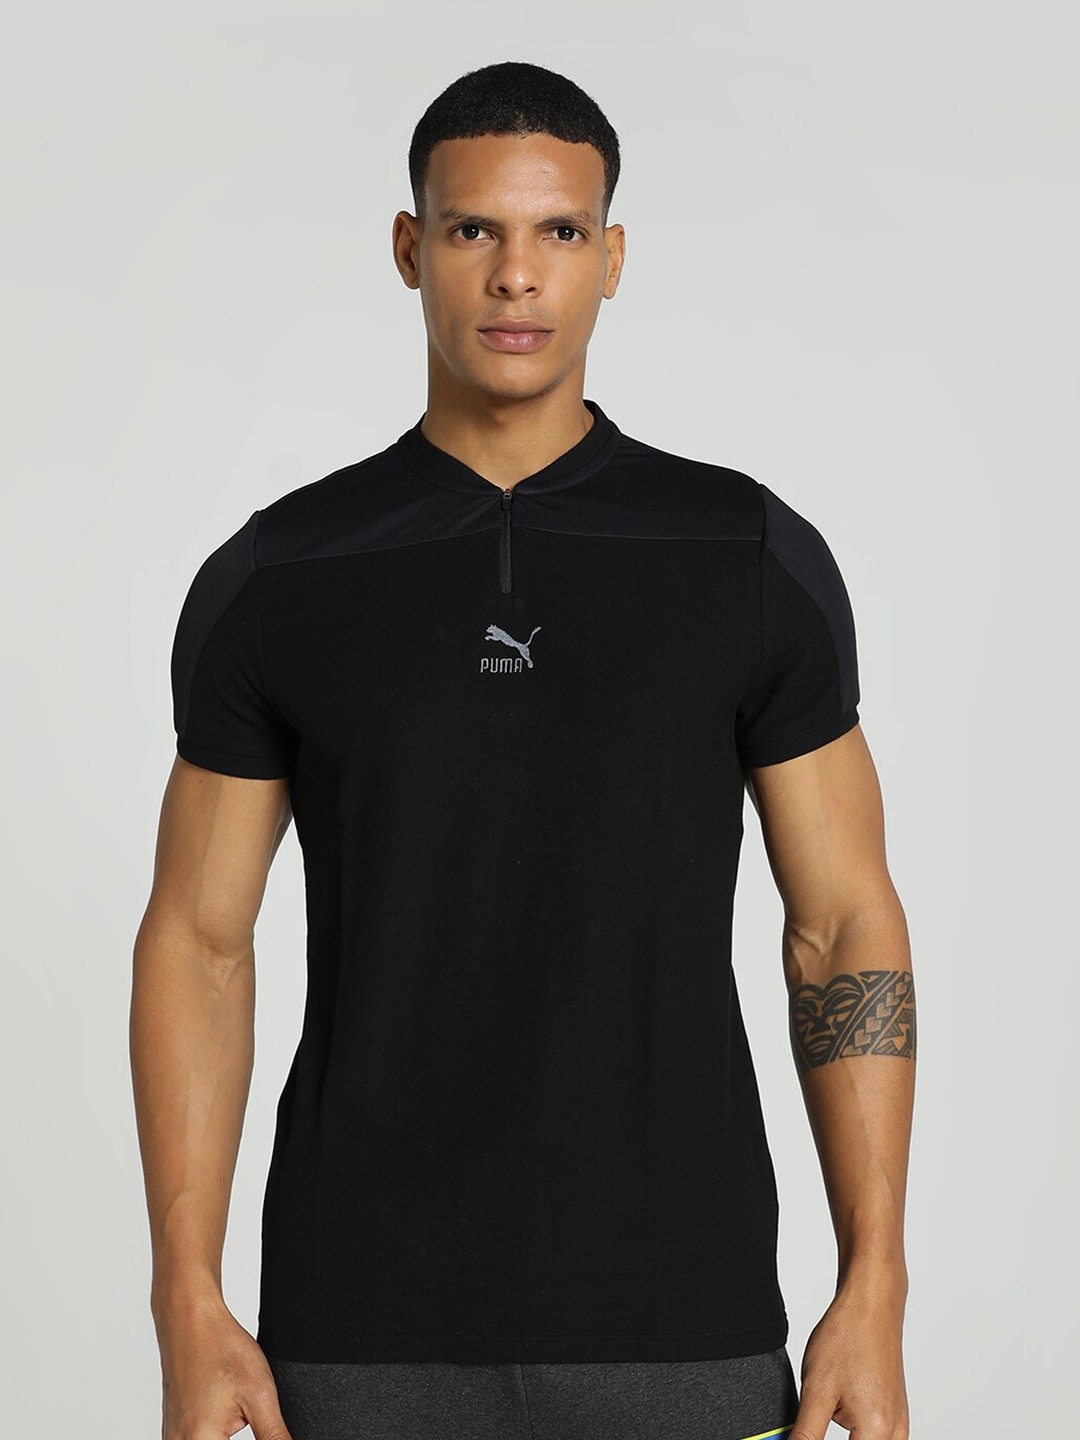 Puma Overlay Slim Fit T-shirt